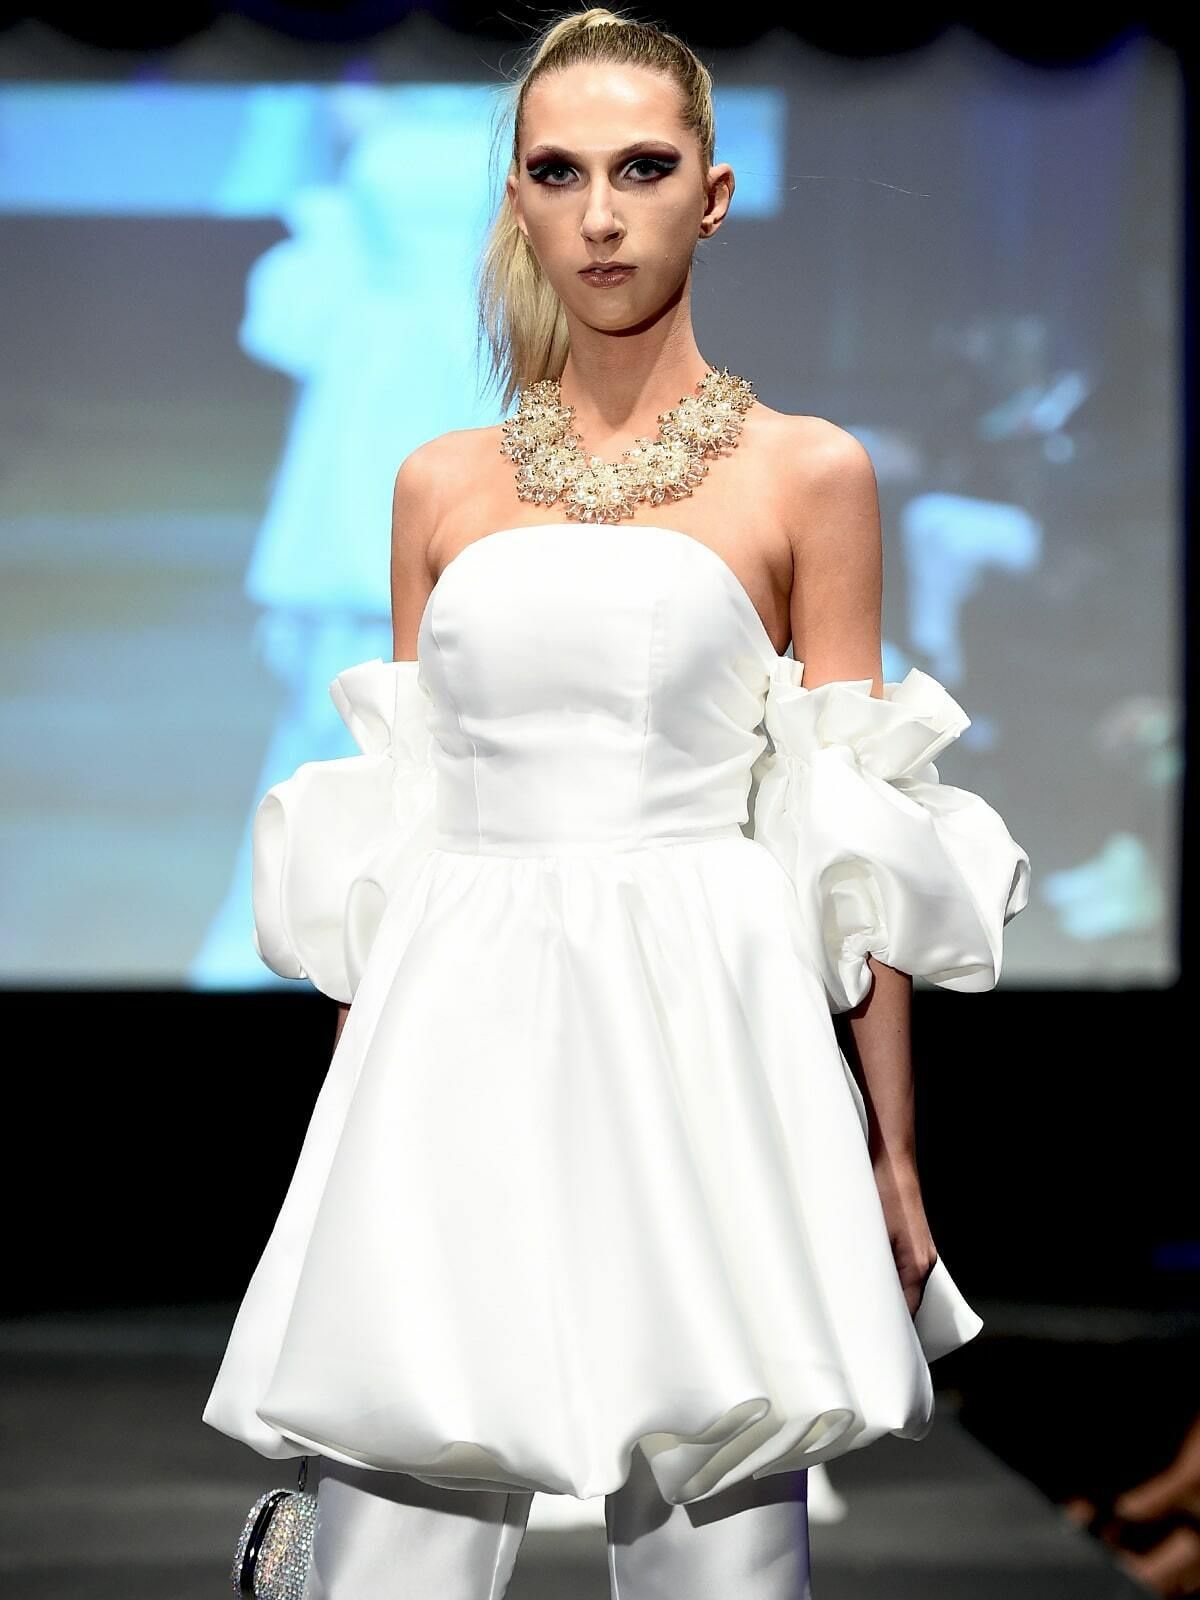 Style Victoria Marc Defang White Size 14 Bachelorette Plus Size Bridal Shower Prom Jumpsuit Dress on Queenly